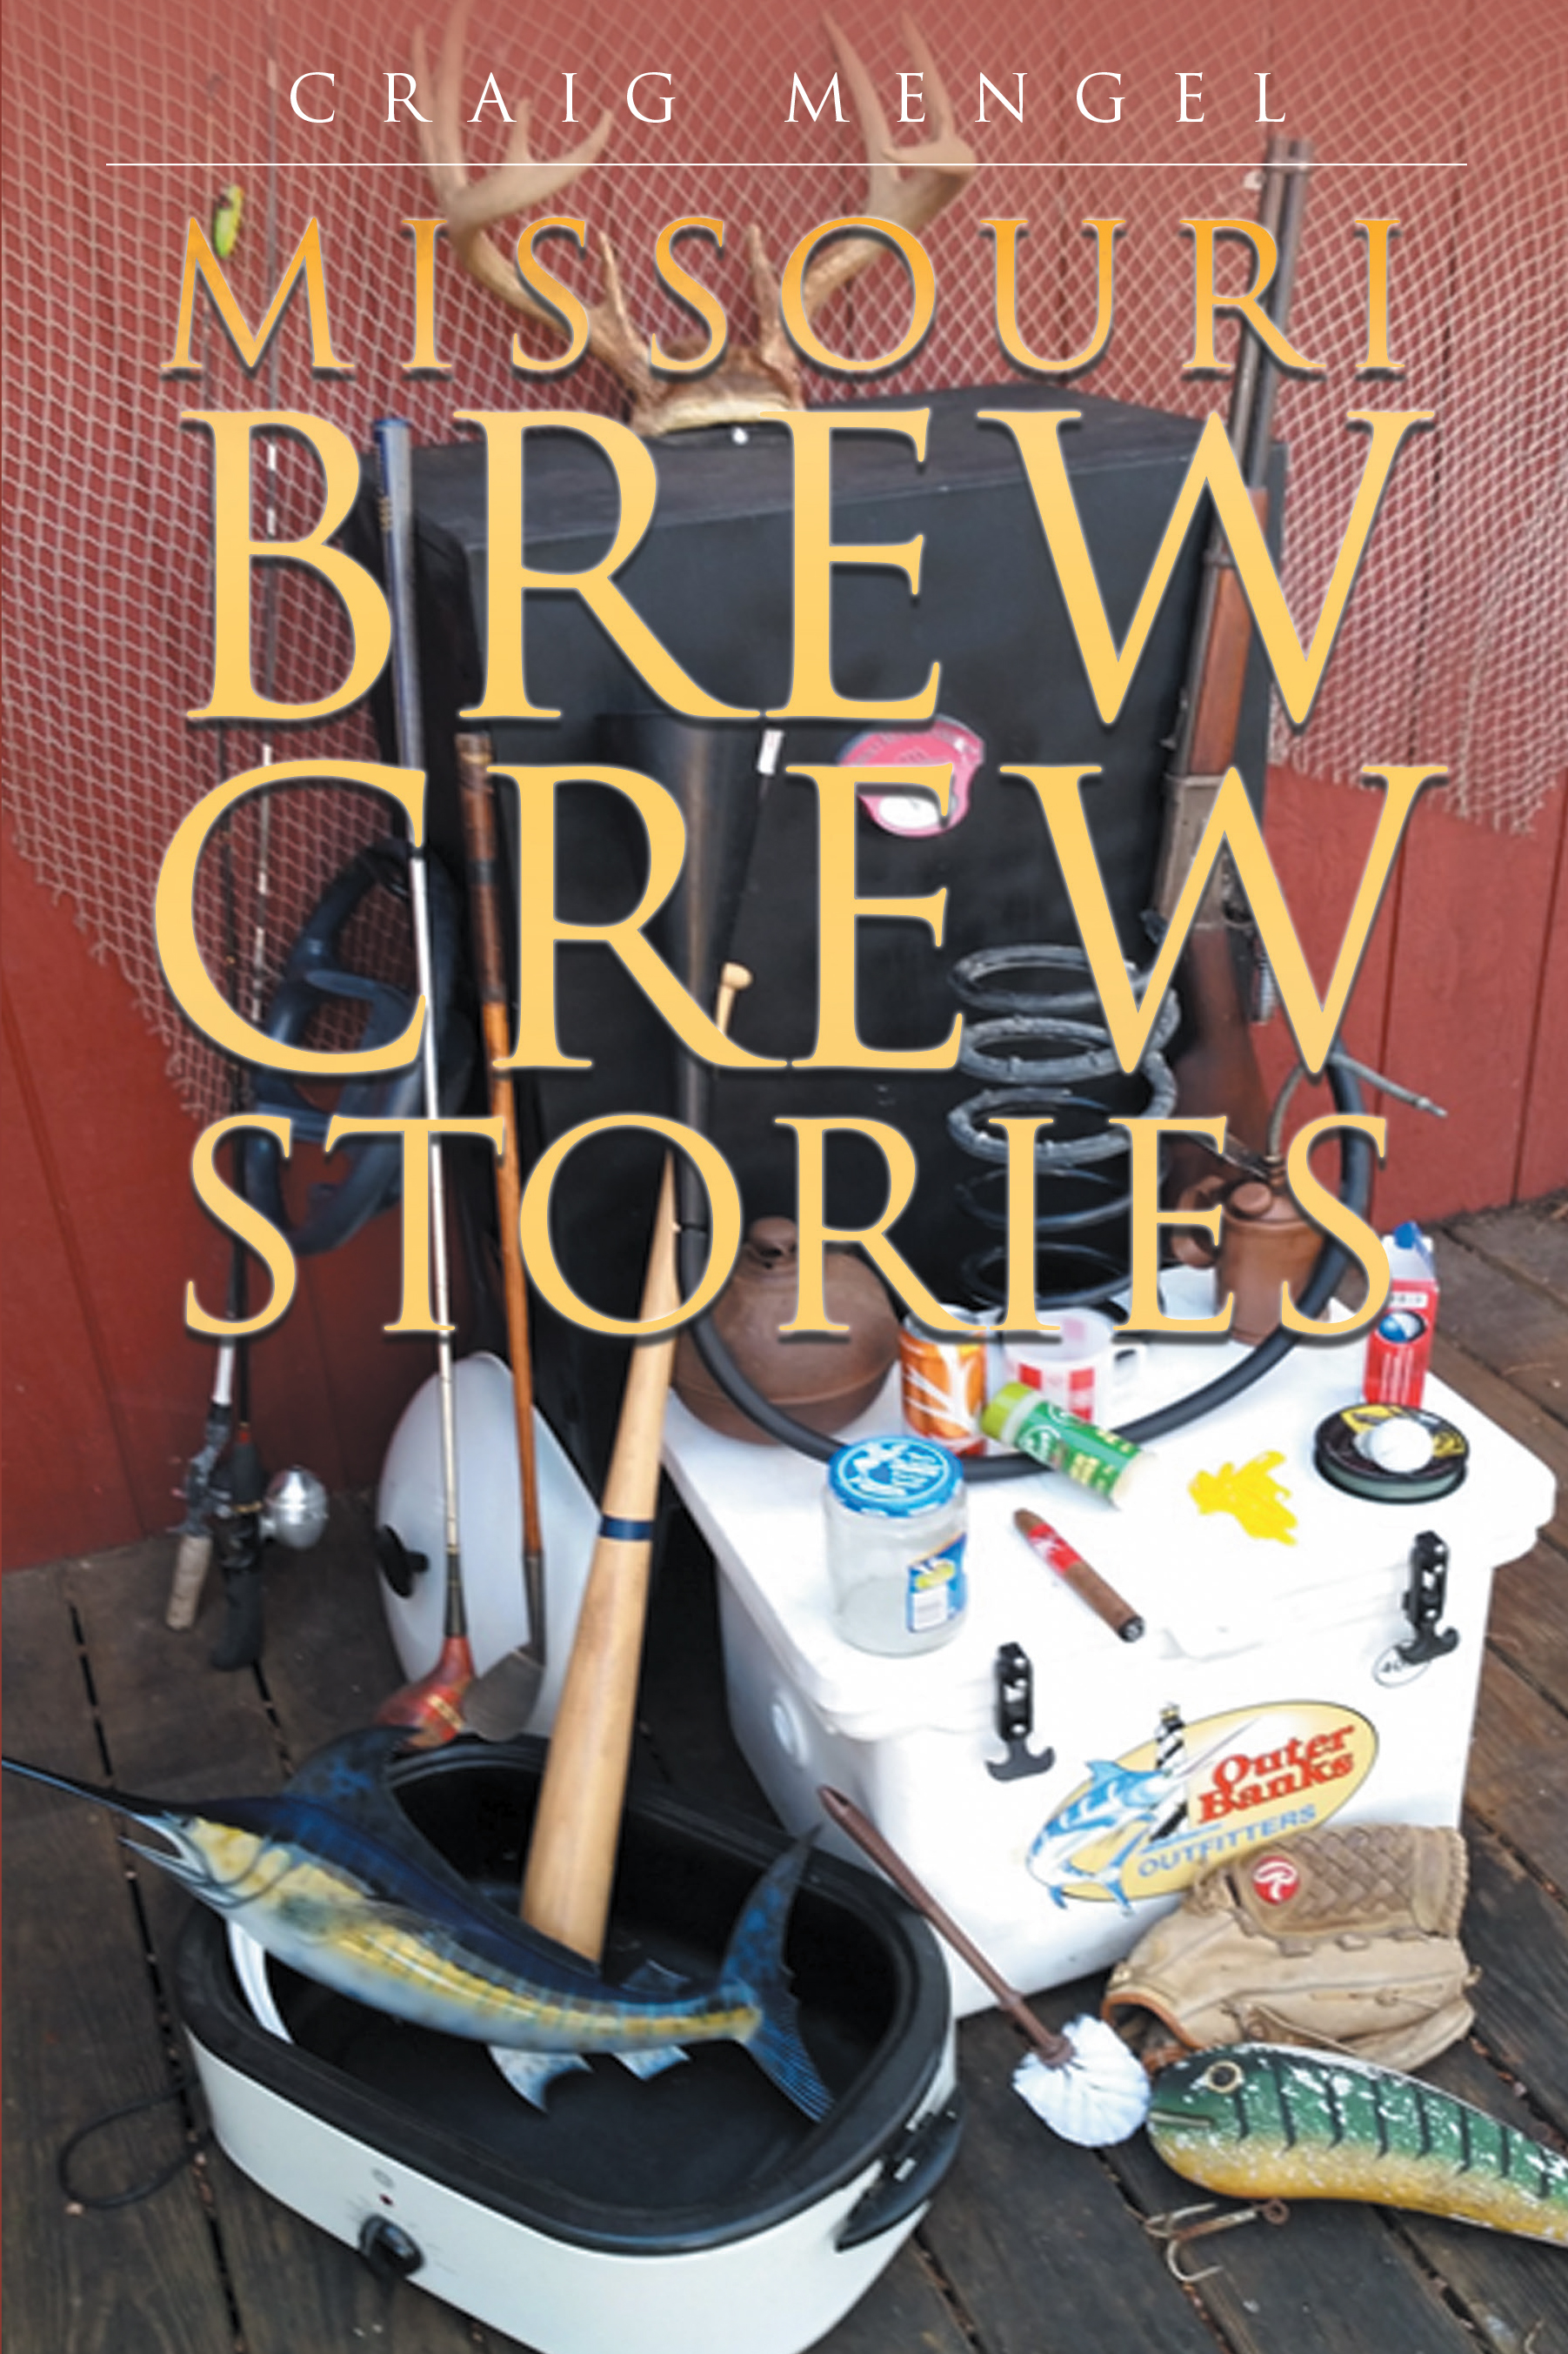 Missouri Brew Crew Stories Cover Image